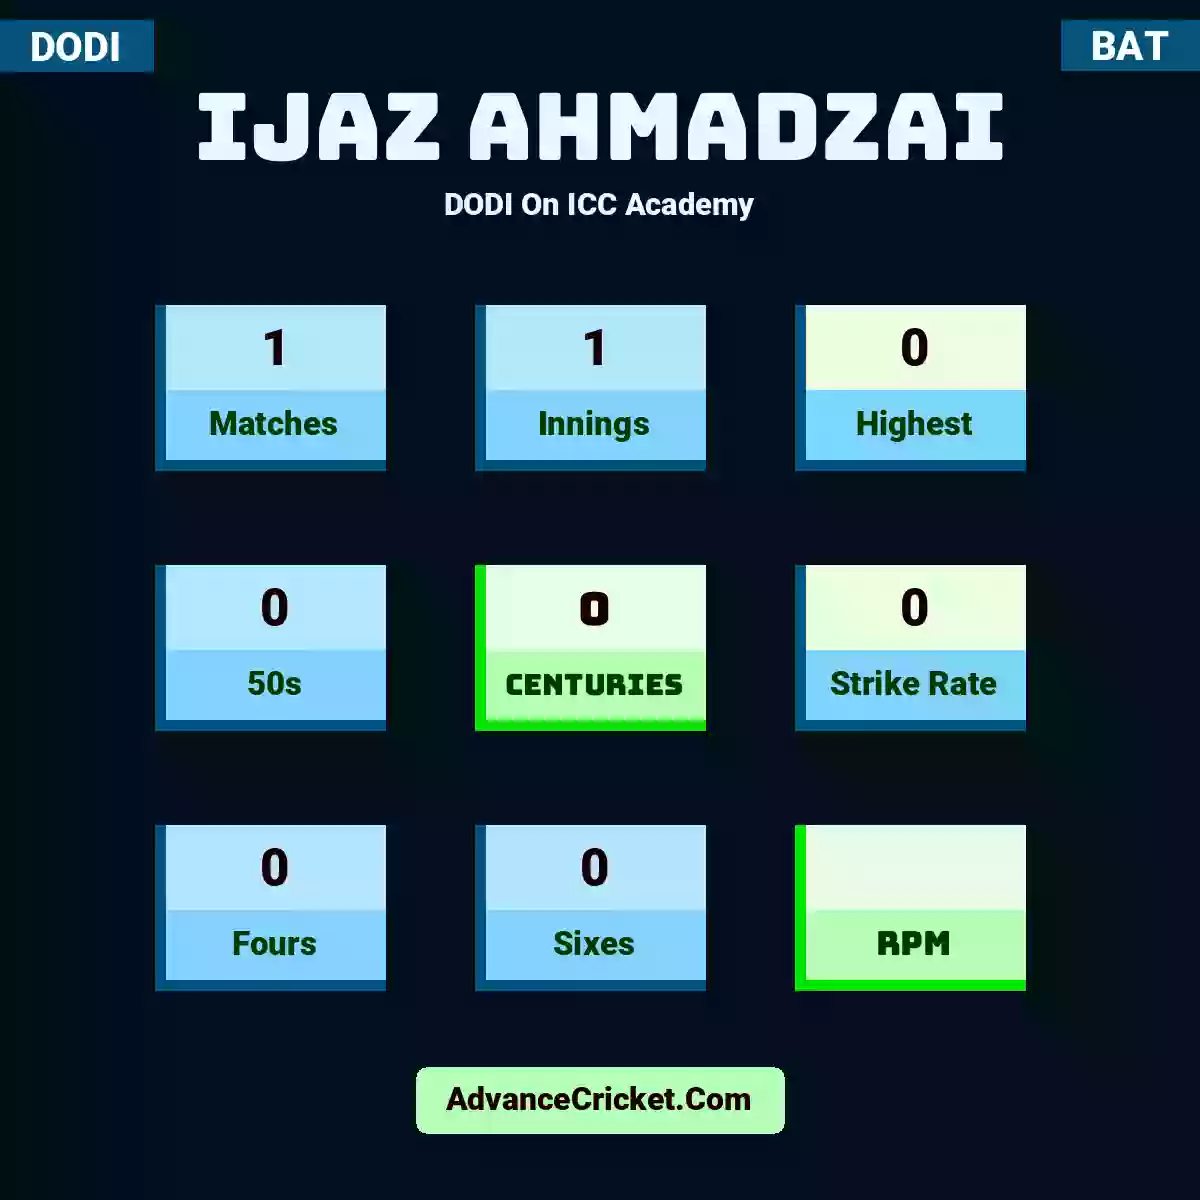 Ijaz Ahmadzai DODI  On ICC Academy, Ijaz Ahmadzai played 1 matches, scored 0 runs as highest, 0 half-centuries, and 0 centuries, with a strike rate of 0. I.Ahmadzai hit 0 fours and 0 sixes.